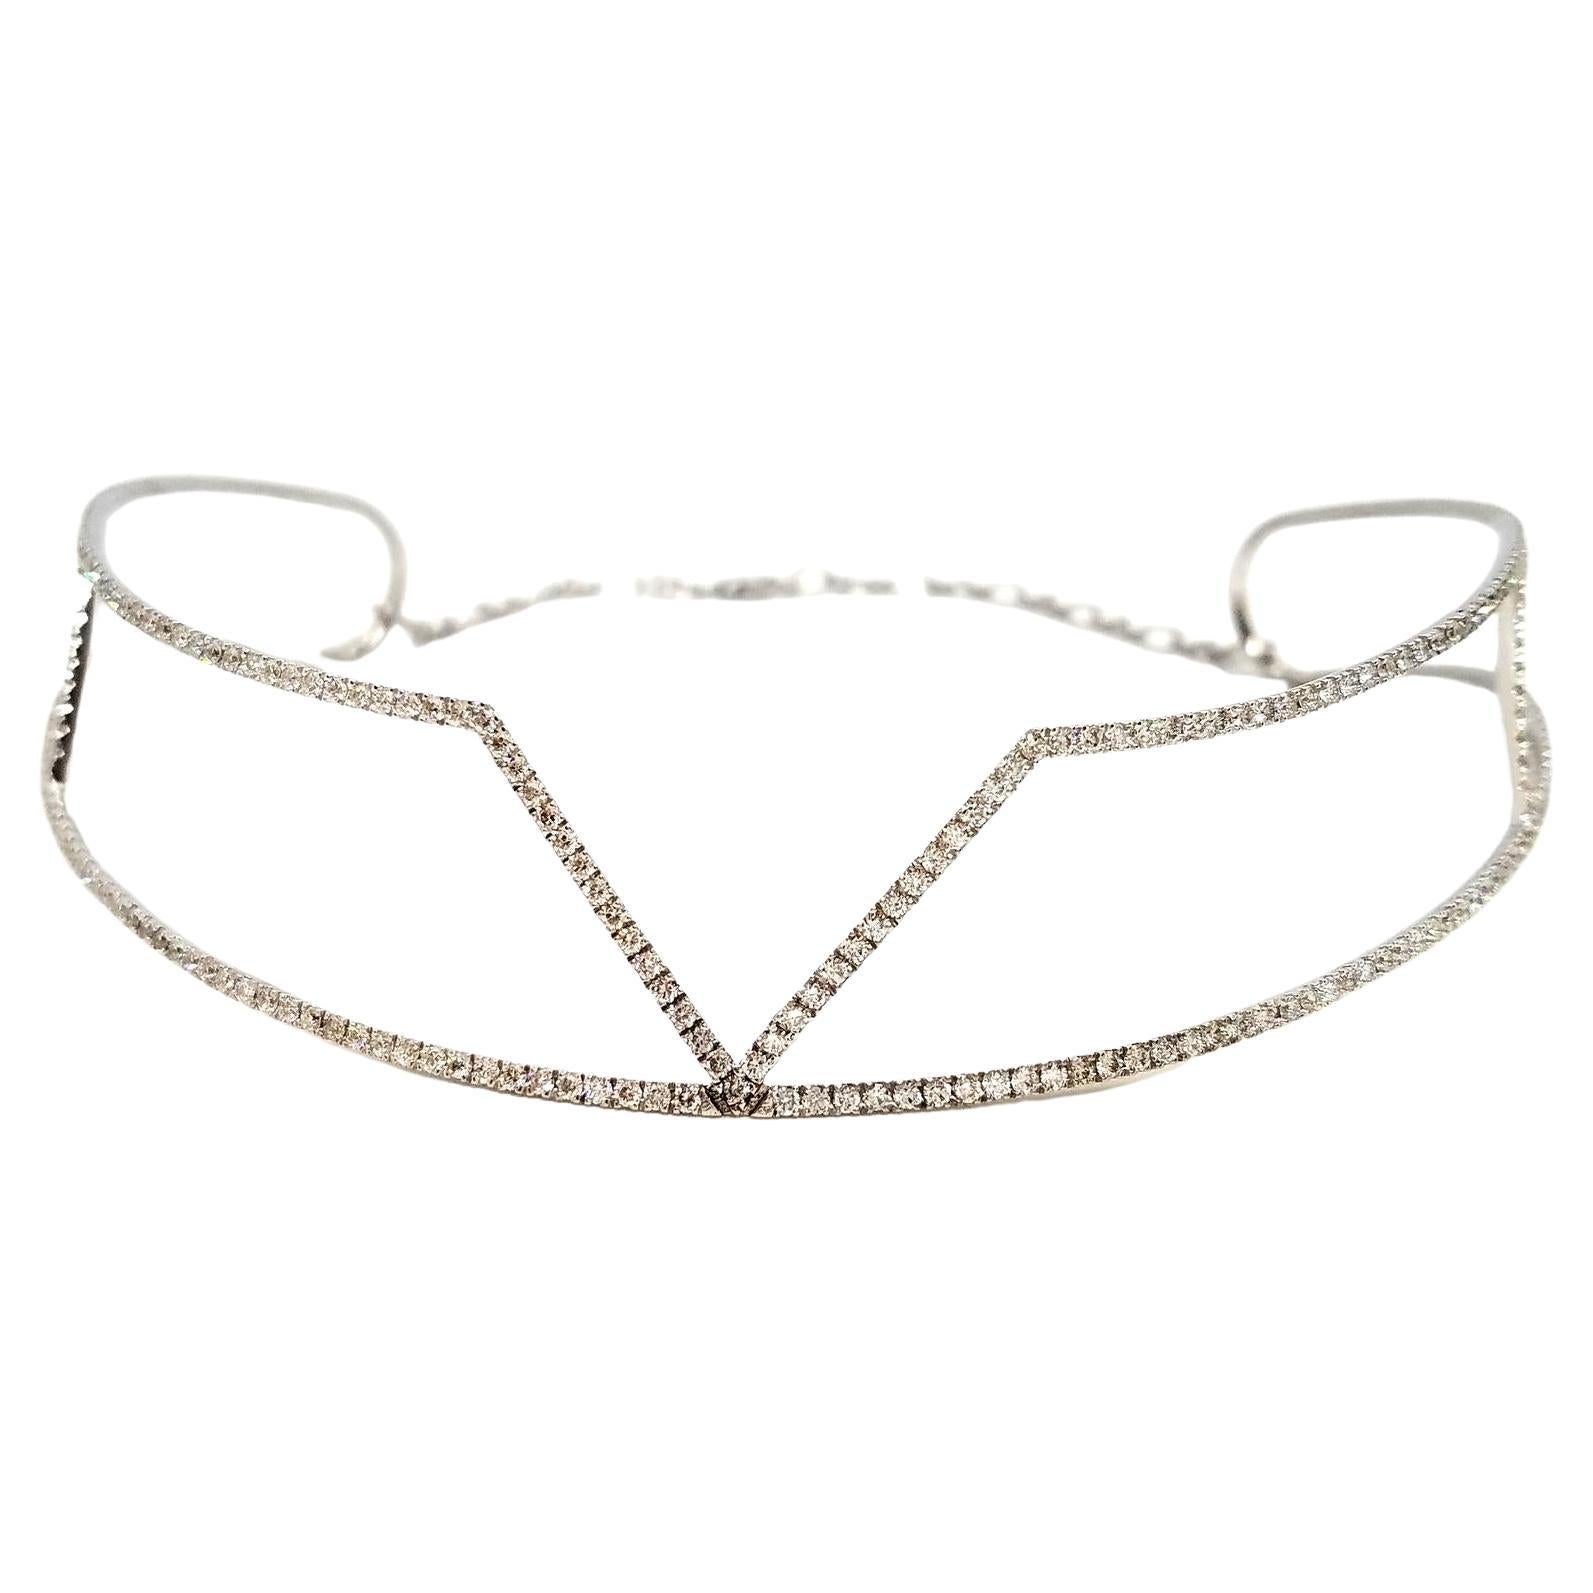 Chain Necklace White GoldDiamond For Sale